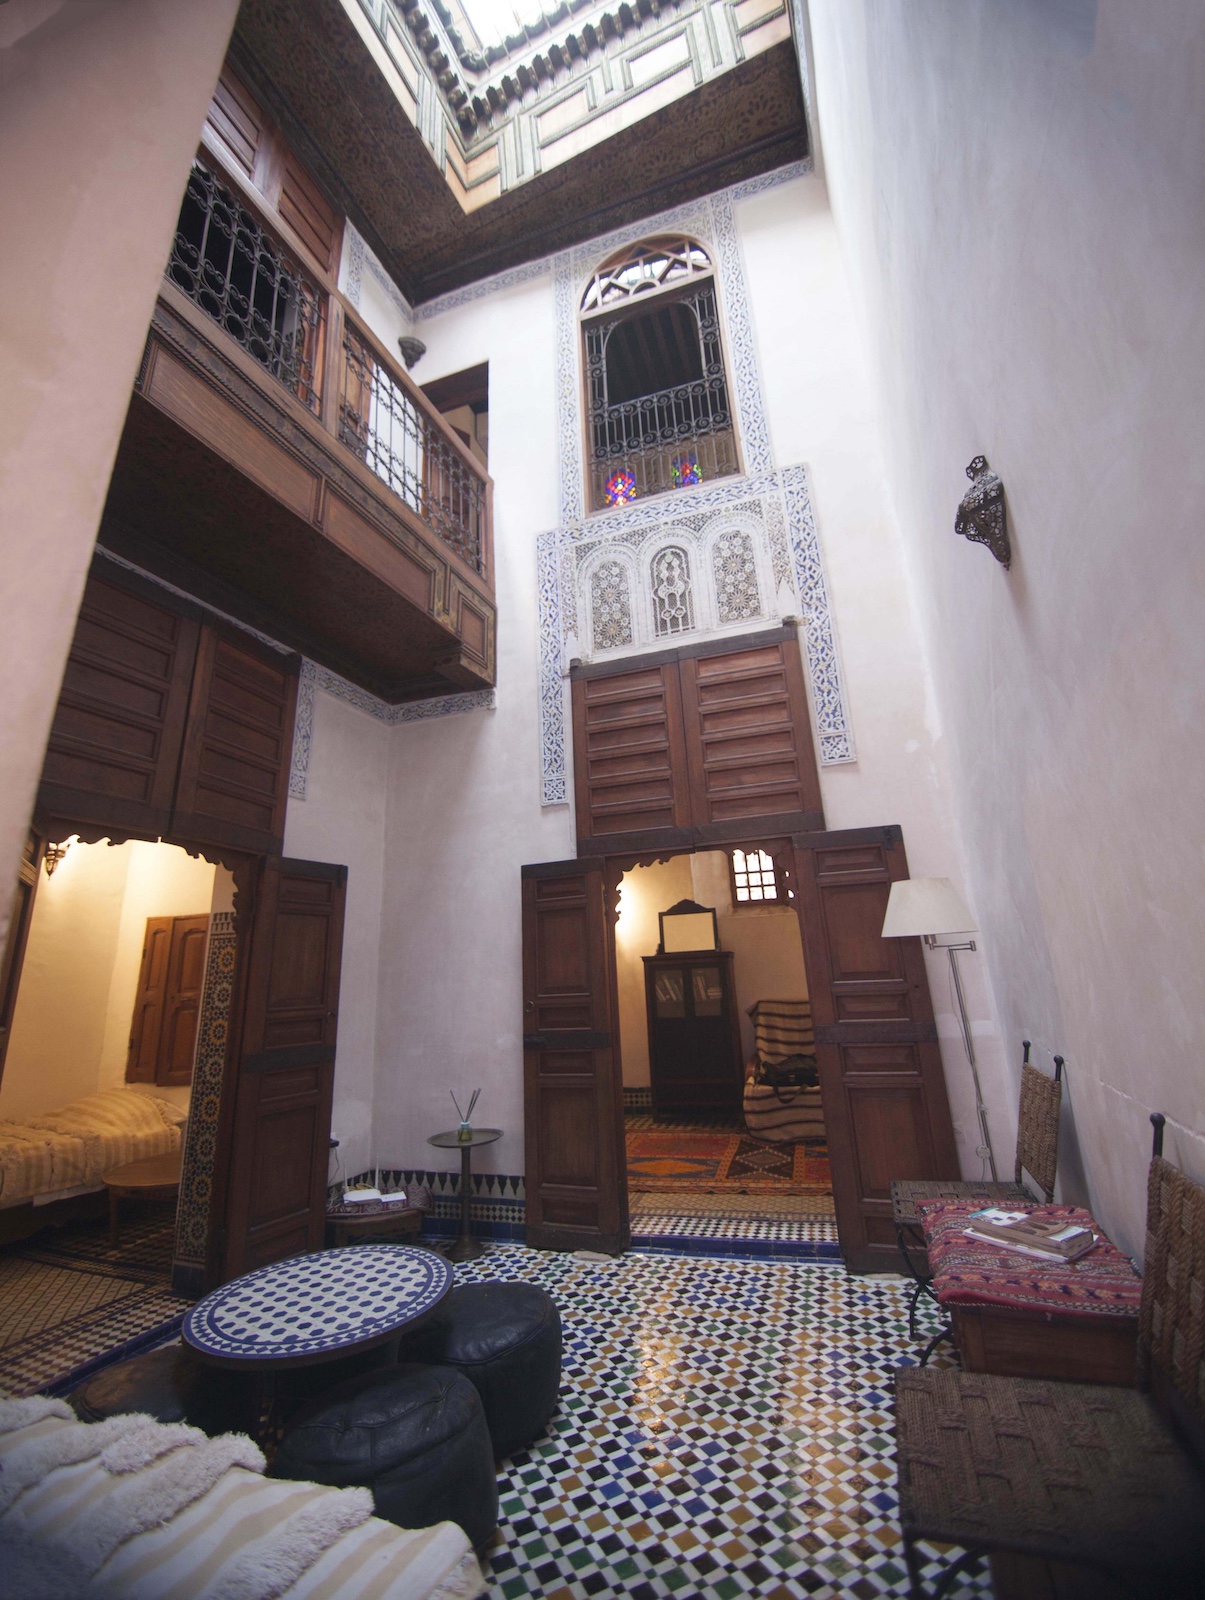 The Interior Courtyard